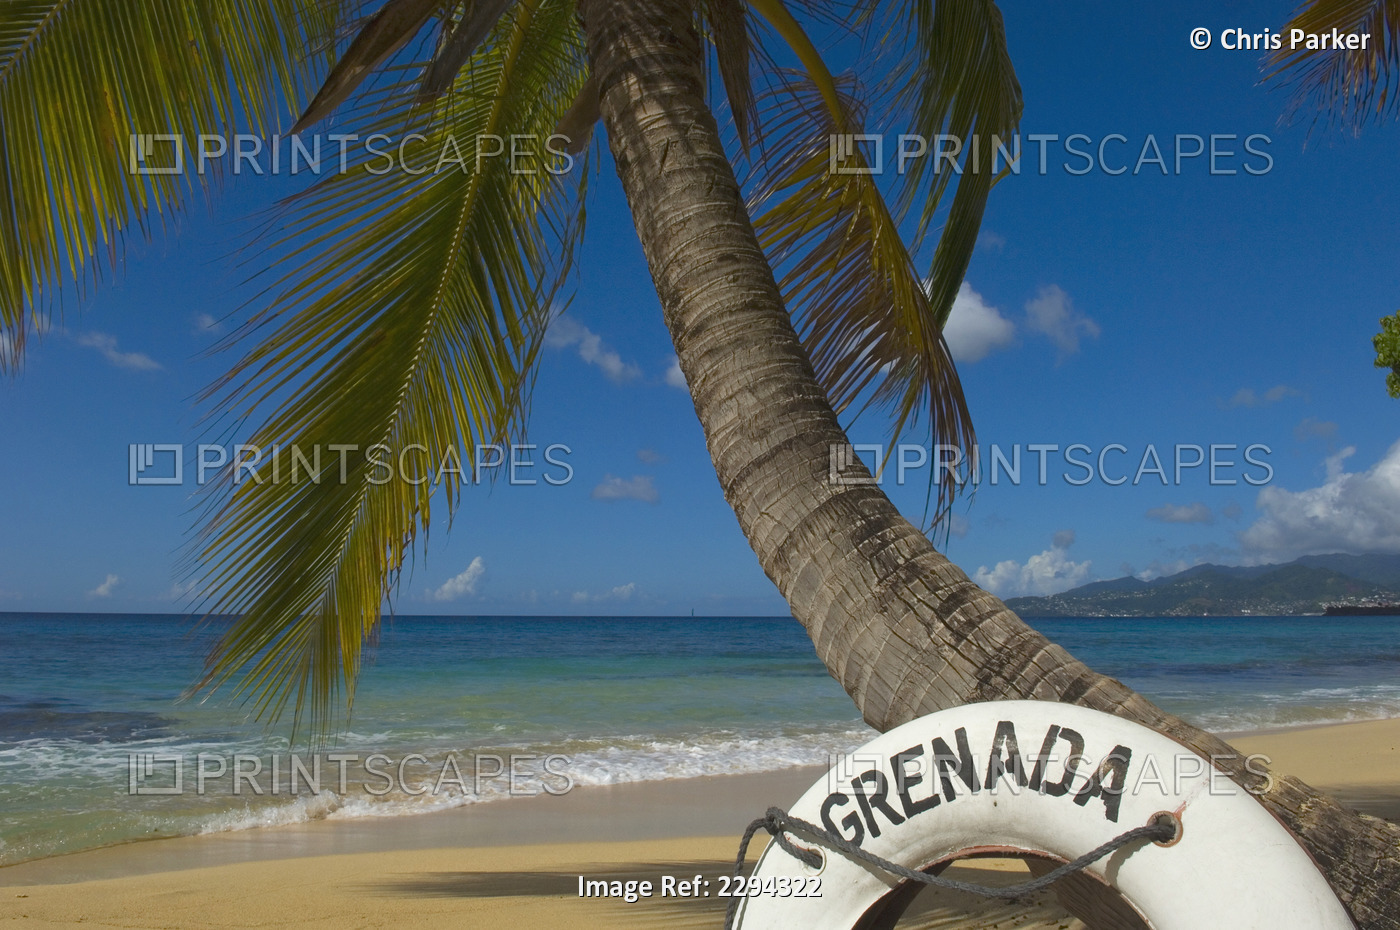 Caribbean, Grenada, Life buoy with Grenada written on it; Magazine Beach